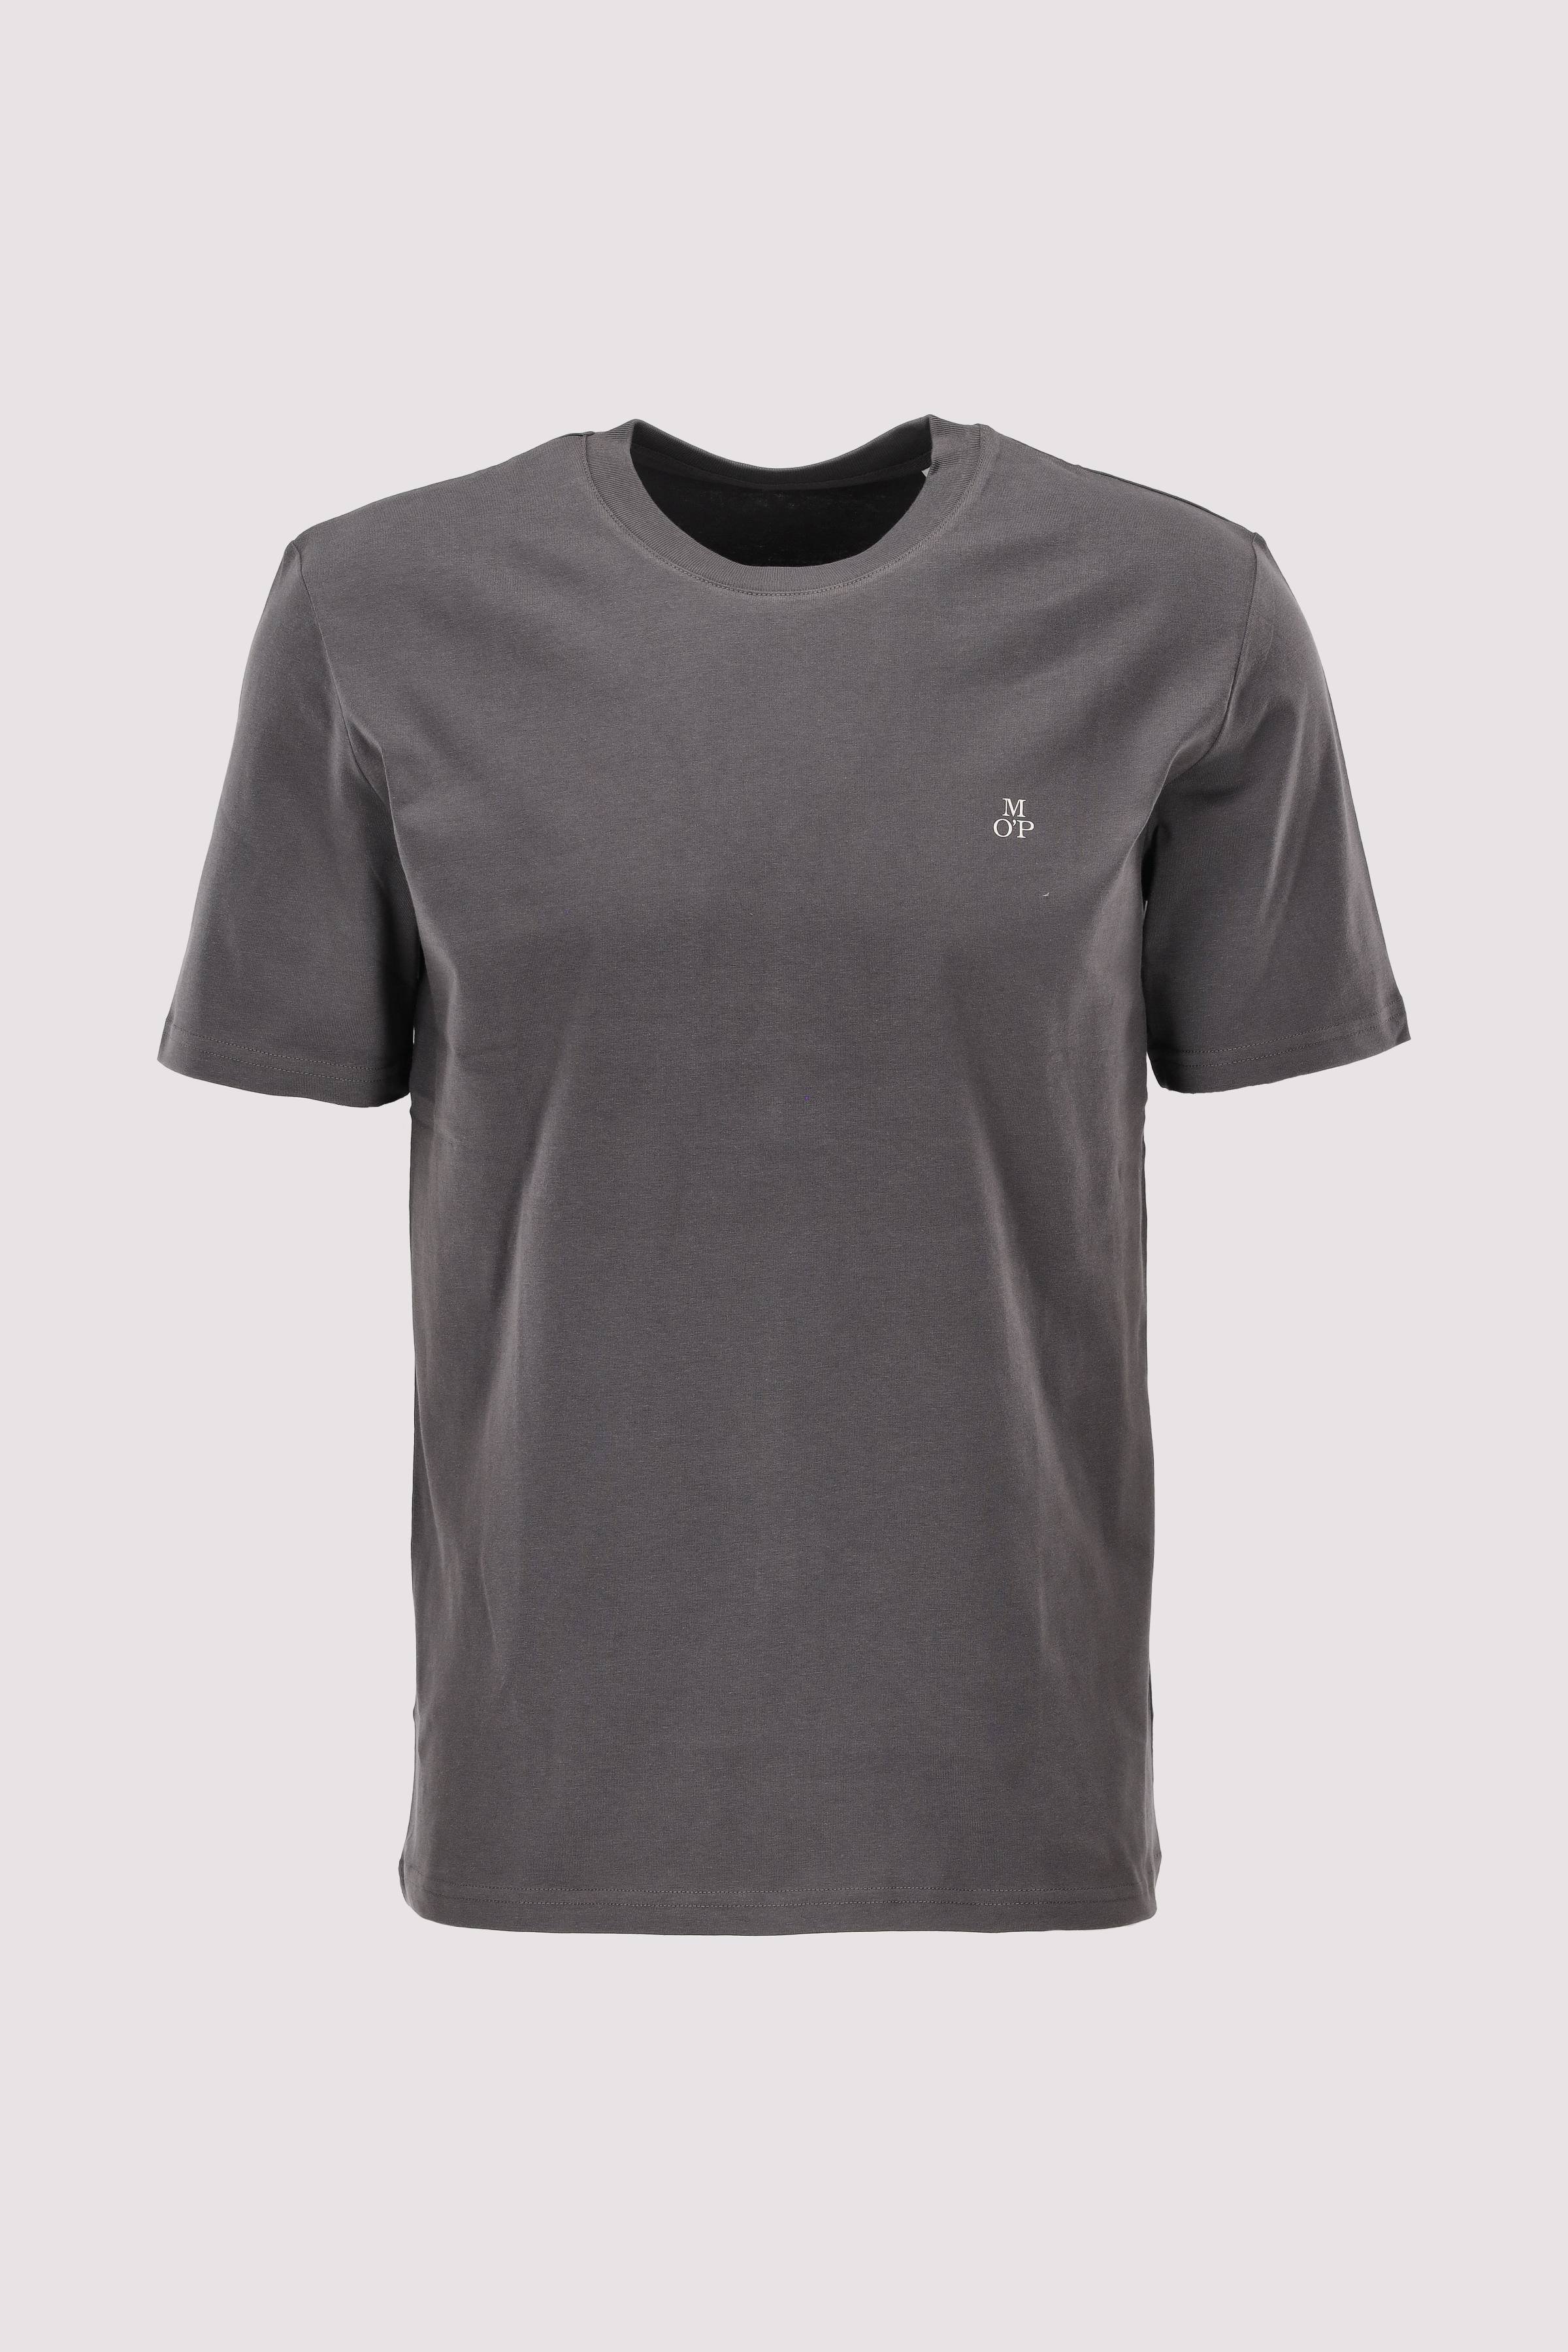 T-shirt, short sleeve, logo pr